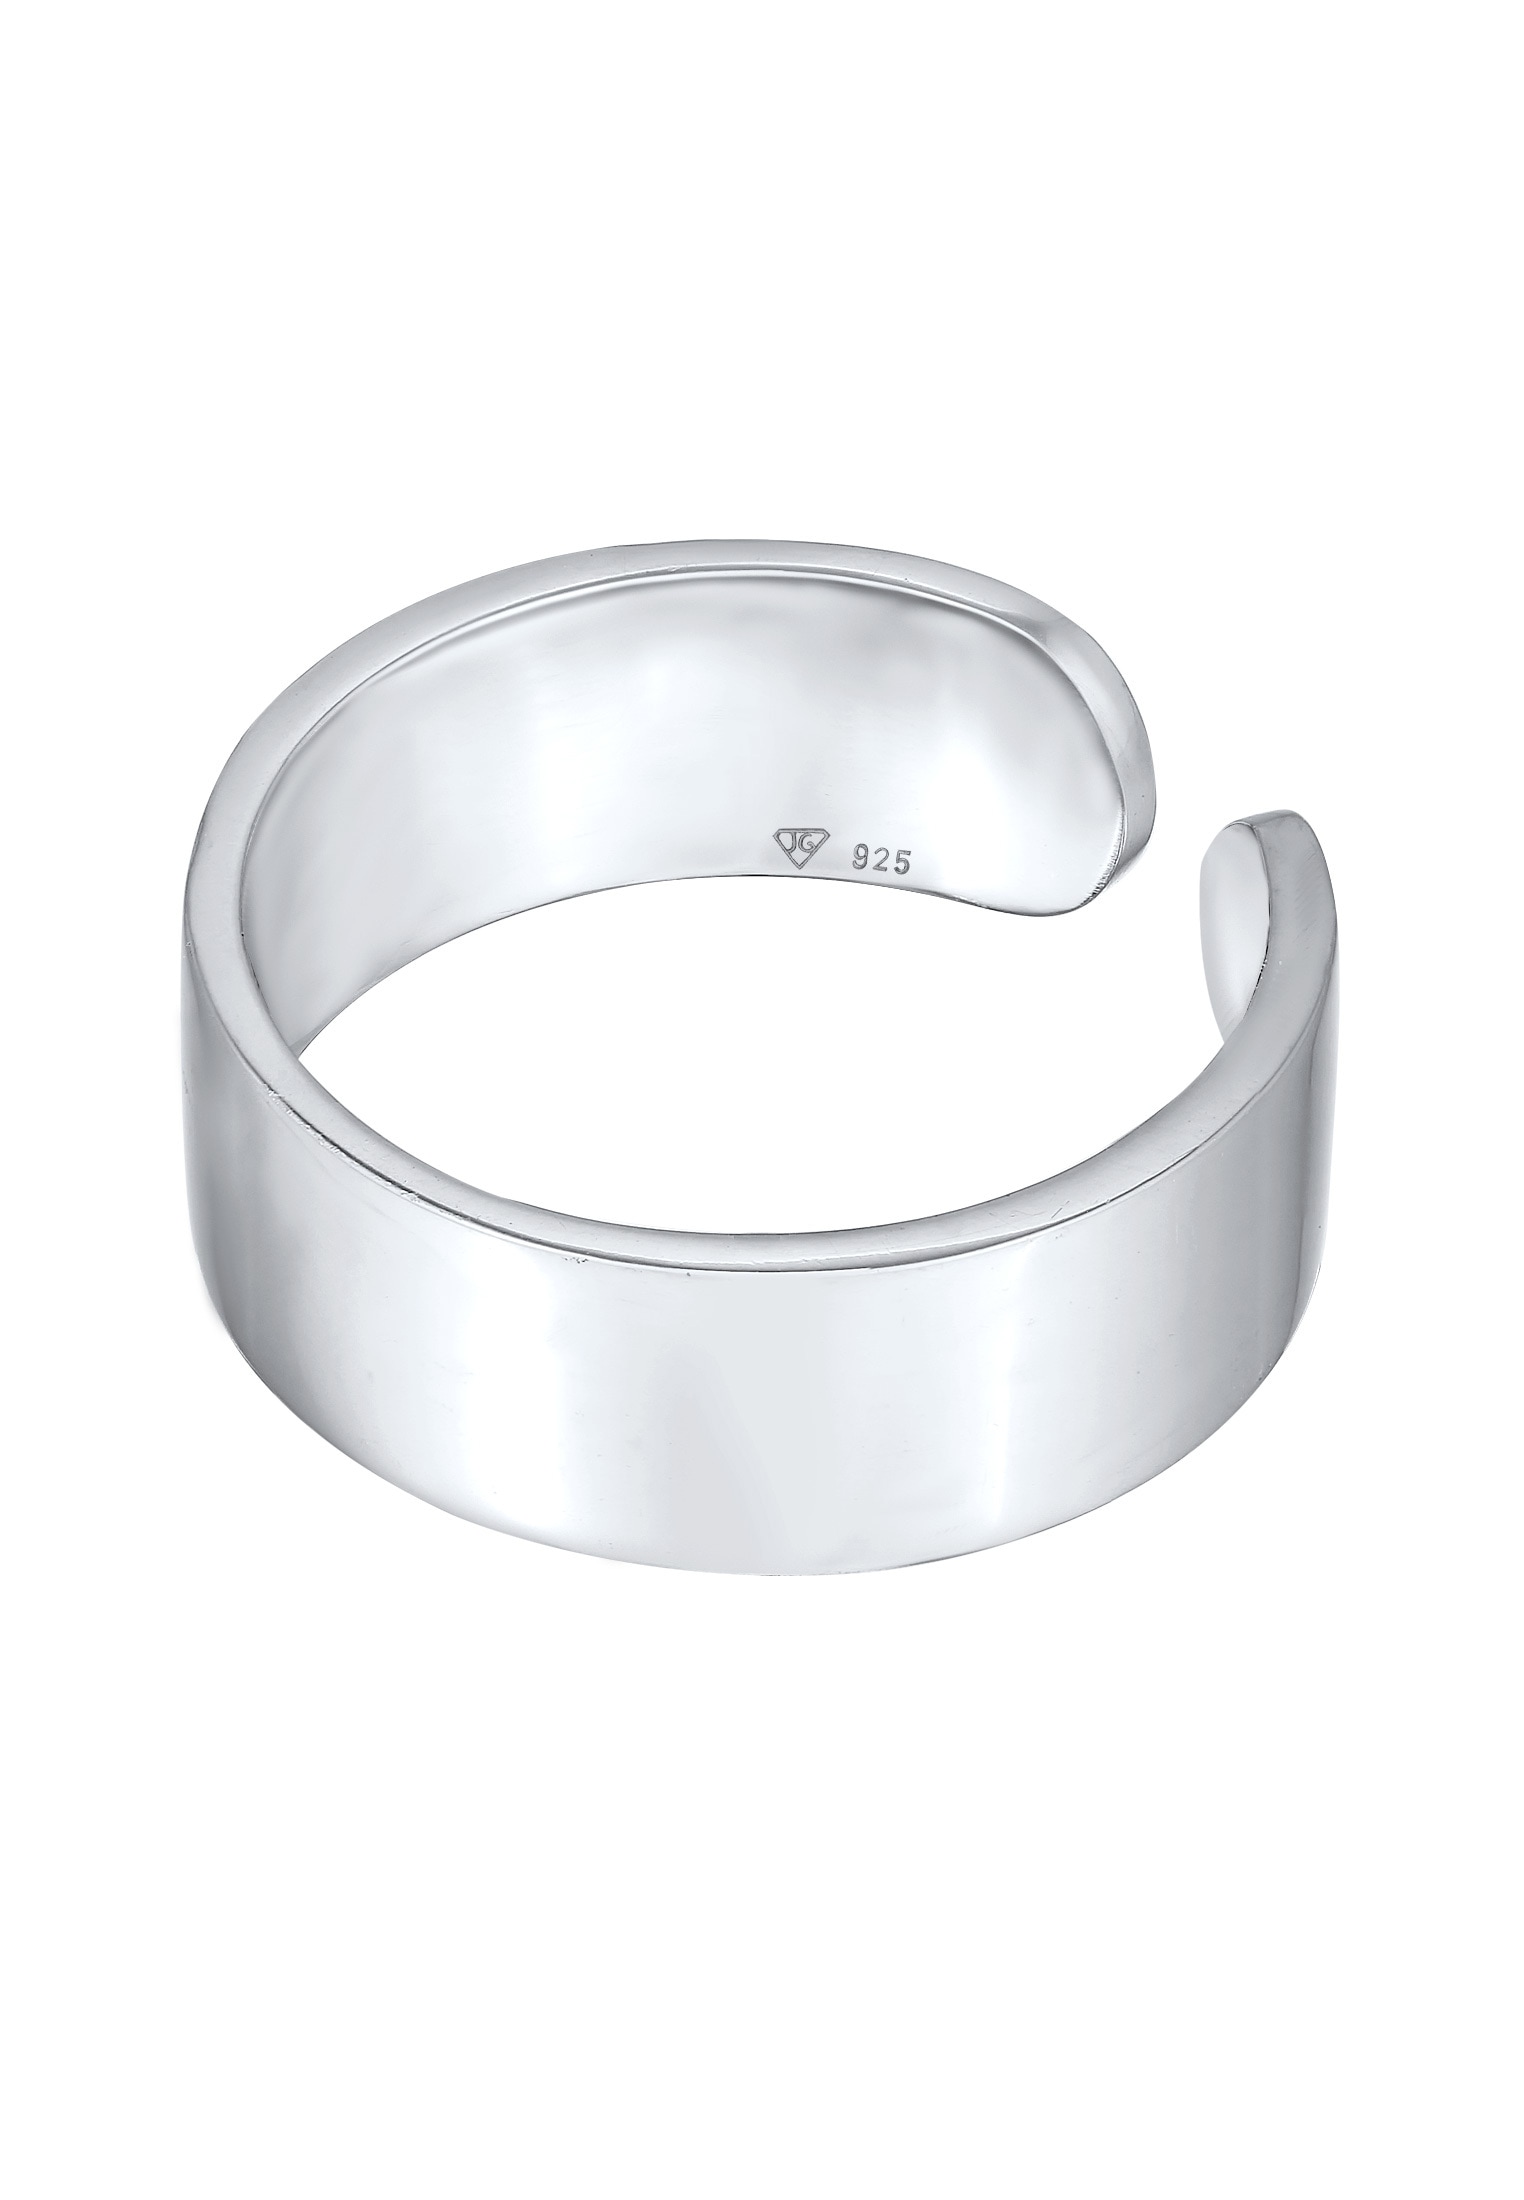 Kuzzoi Silberring »Bandring Klares Design Offen 925 Silber« bestellen | BAUR